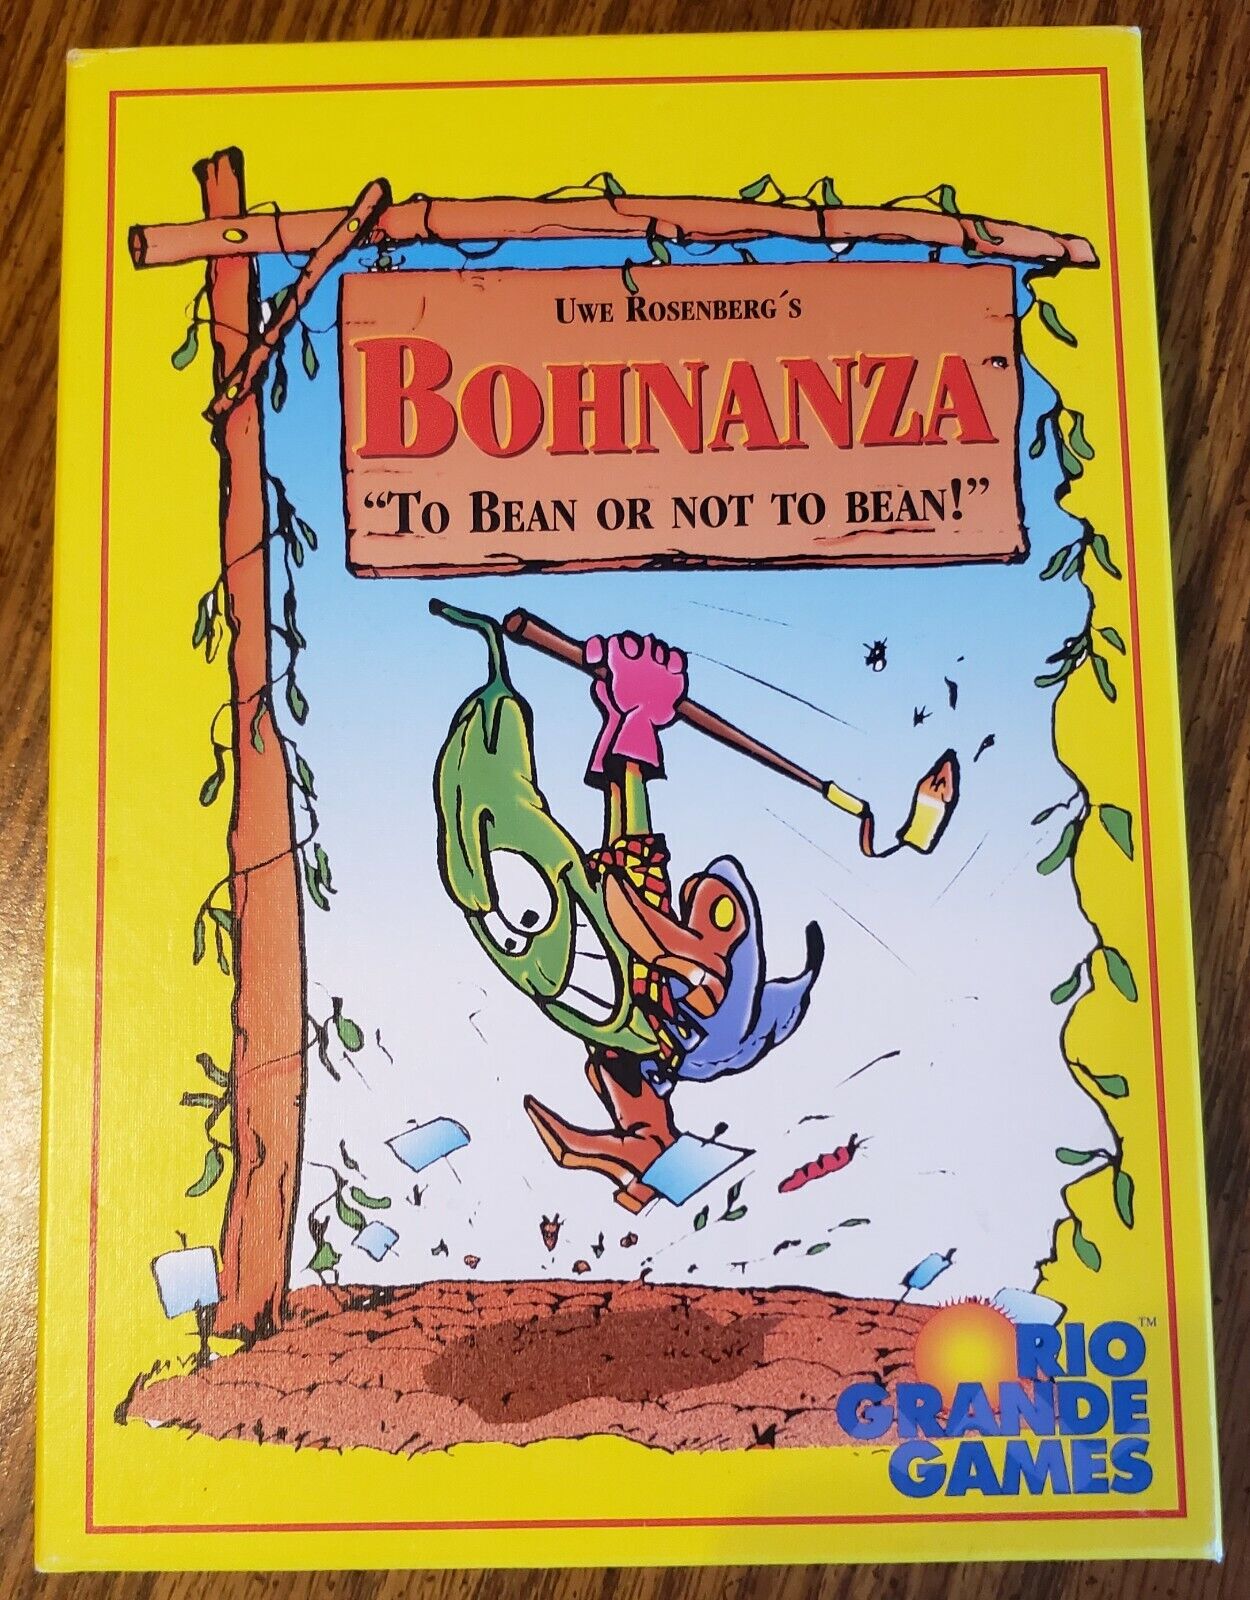 Bohnanza "To Bean or Not to Bean!" Card Game - Rio Grande Games Pre-owned